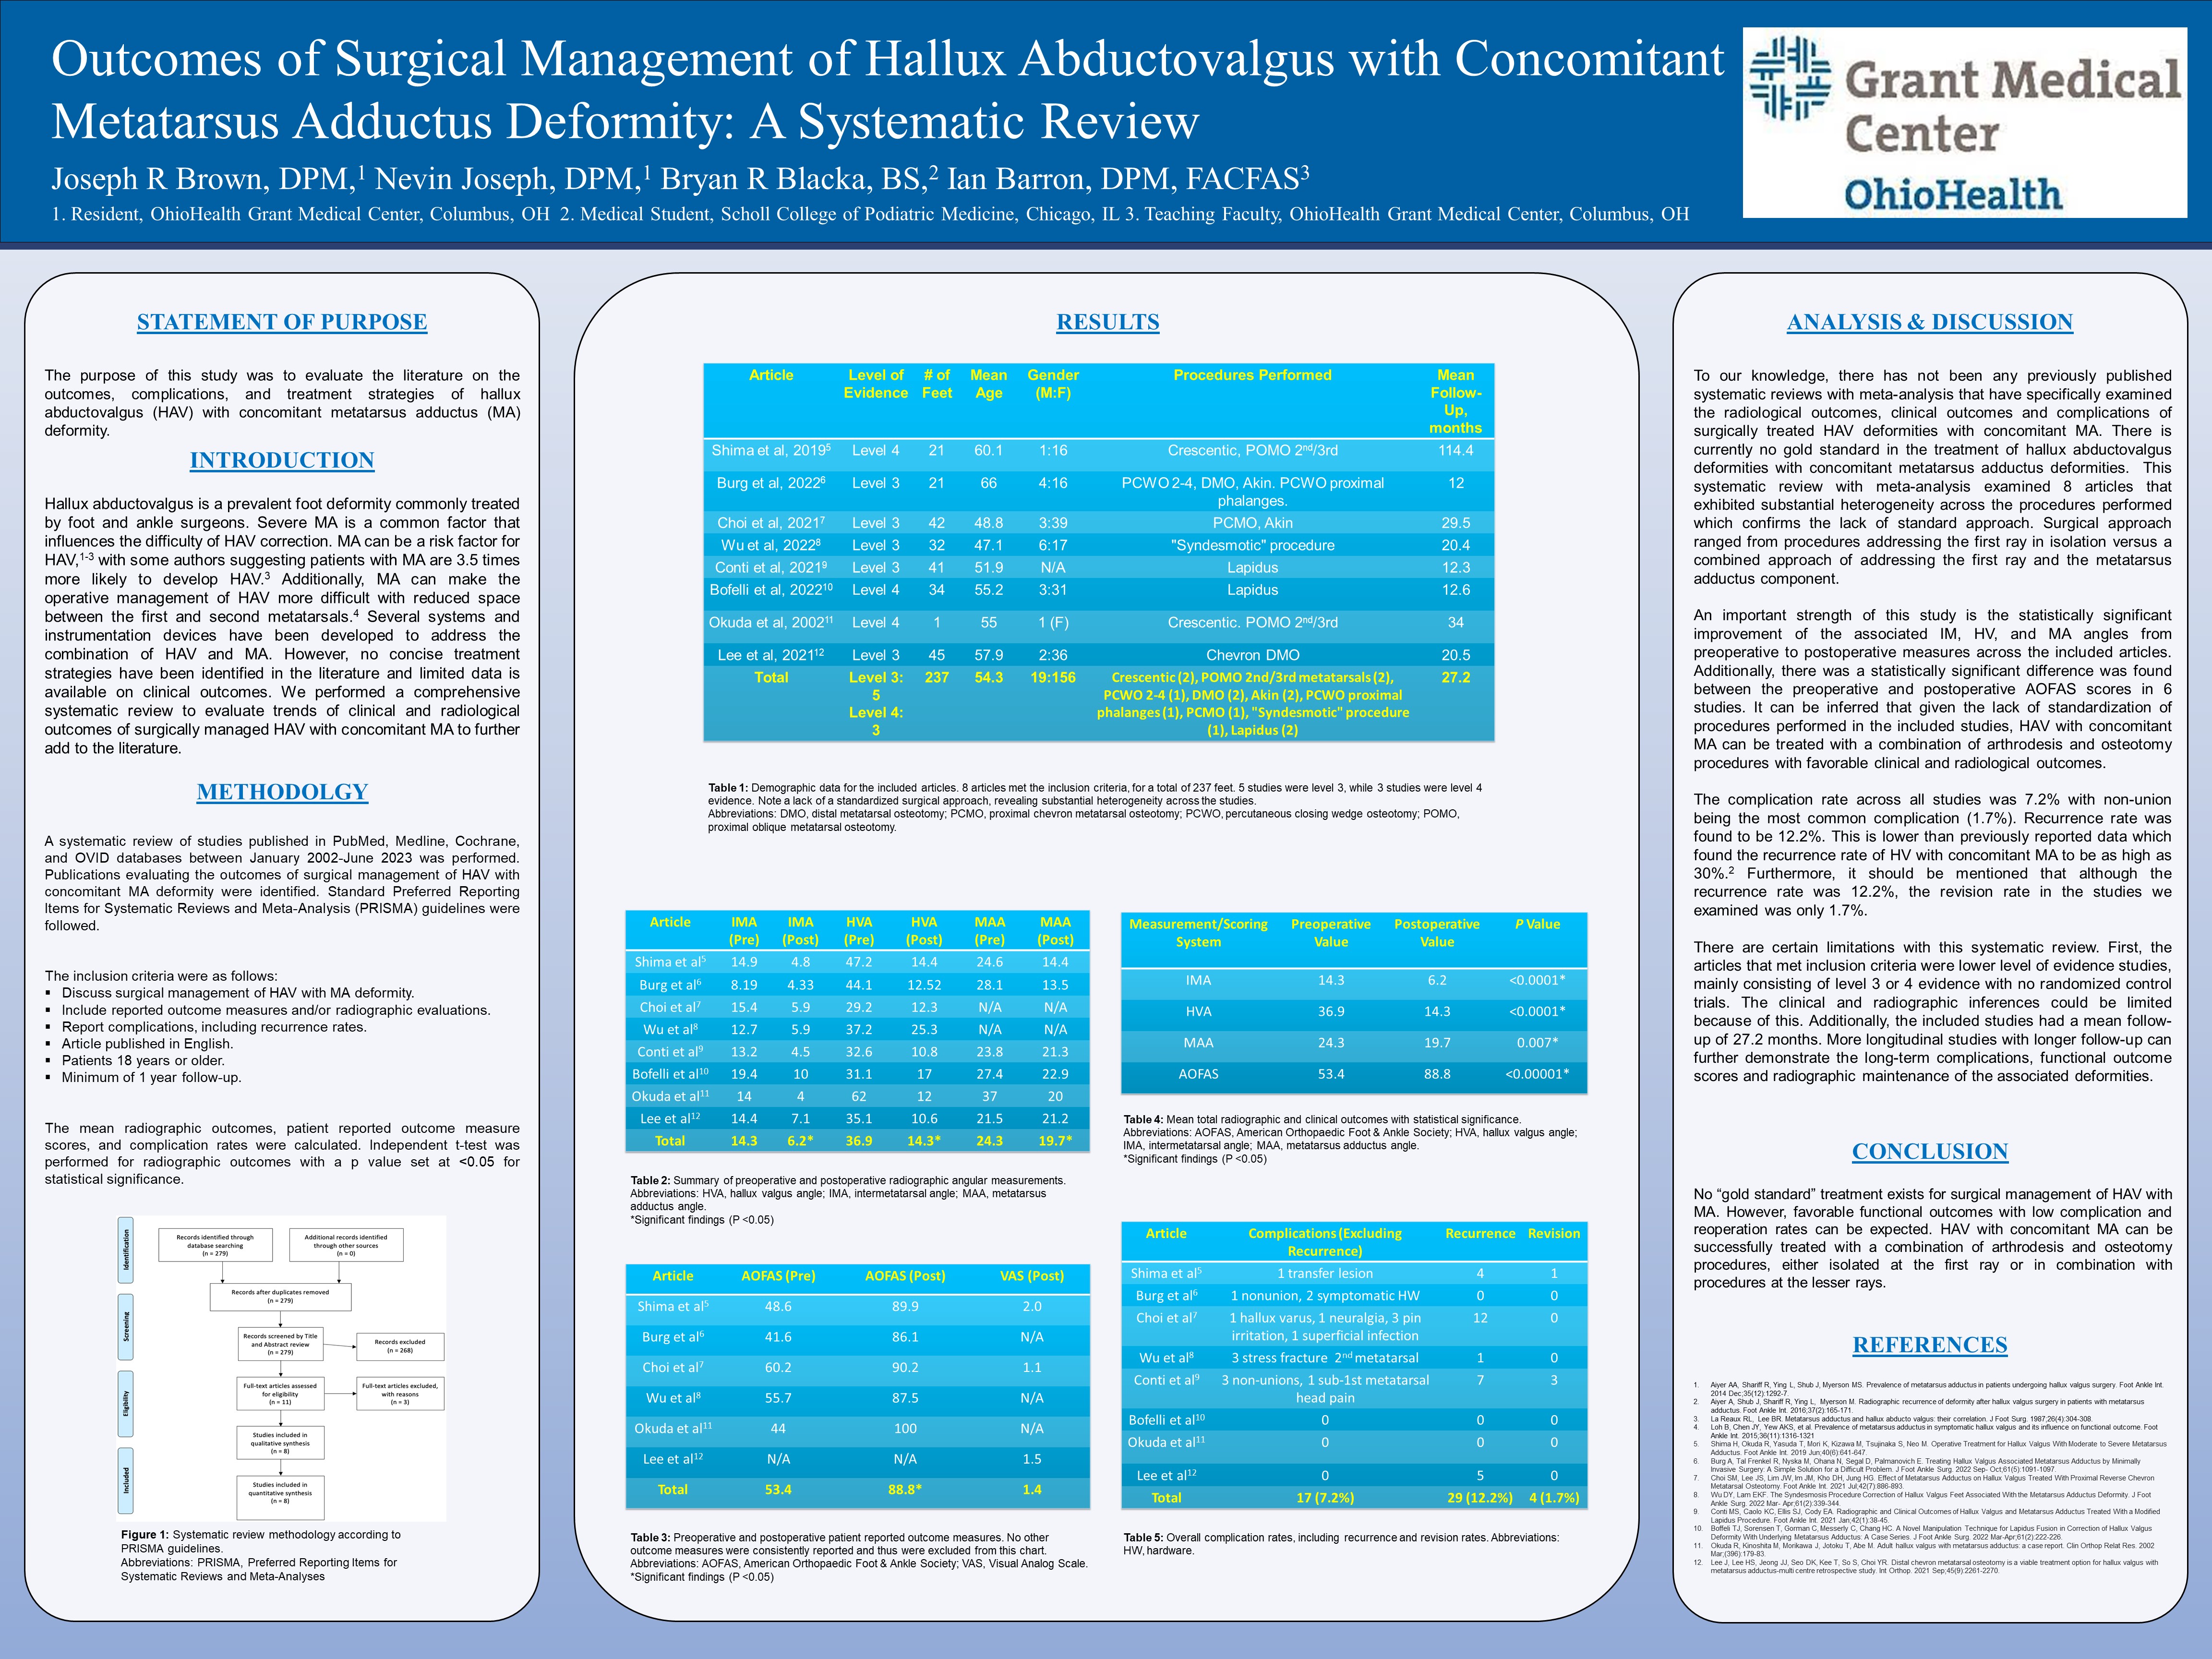 Outcomes of Surgical Management of Hallux Abductovalgus with Concomitant Metatarsus Adductus Deformity